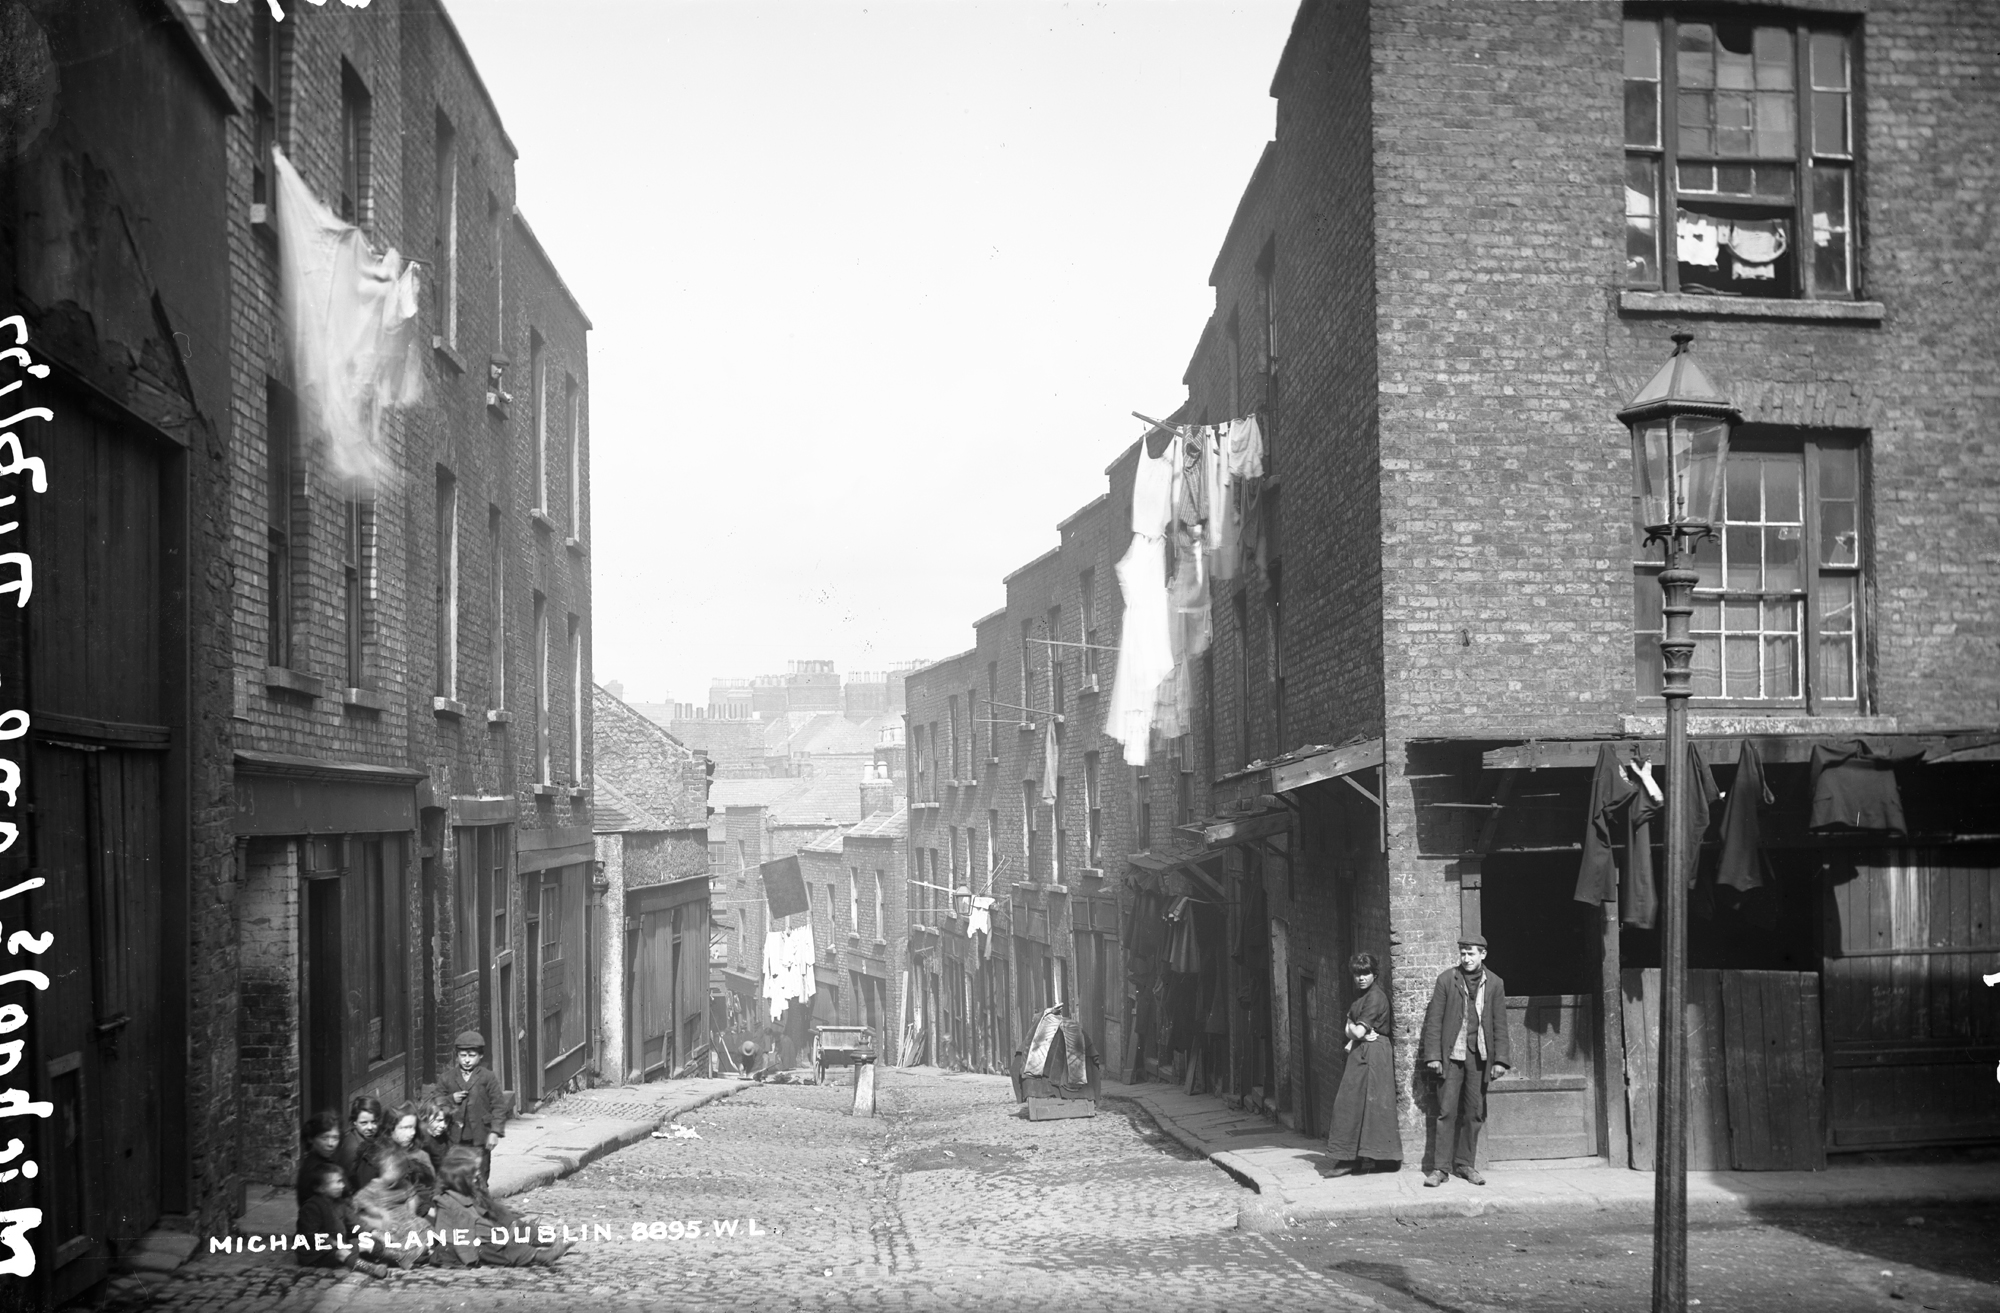 Michael's Lane, Dublin City